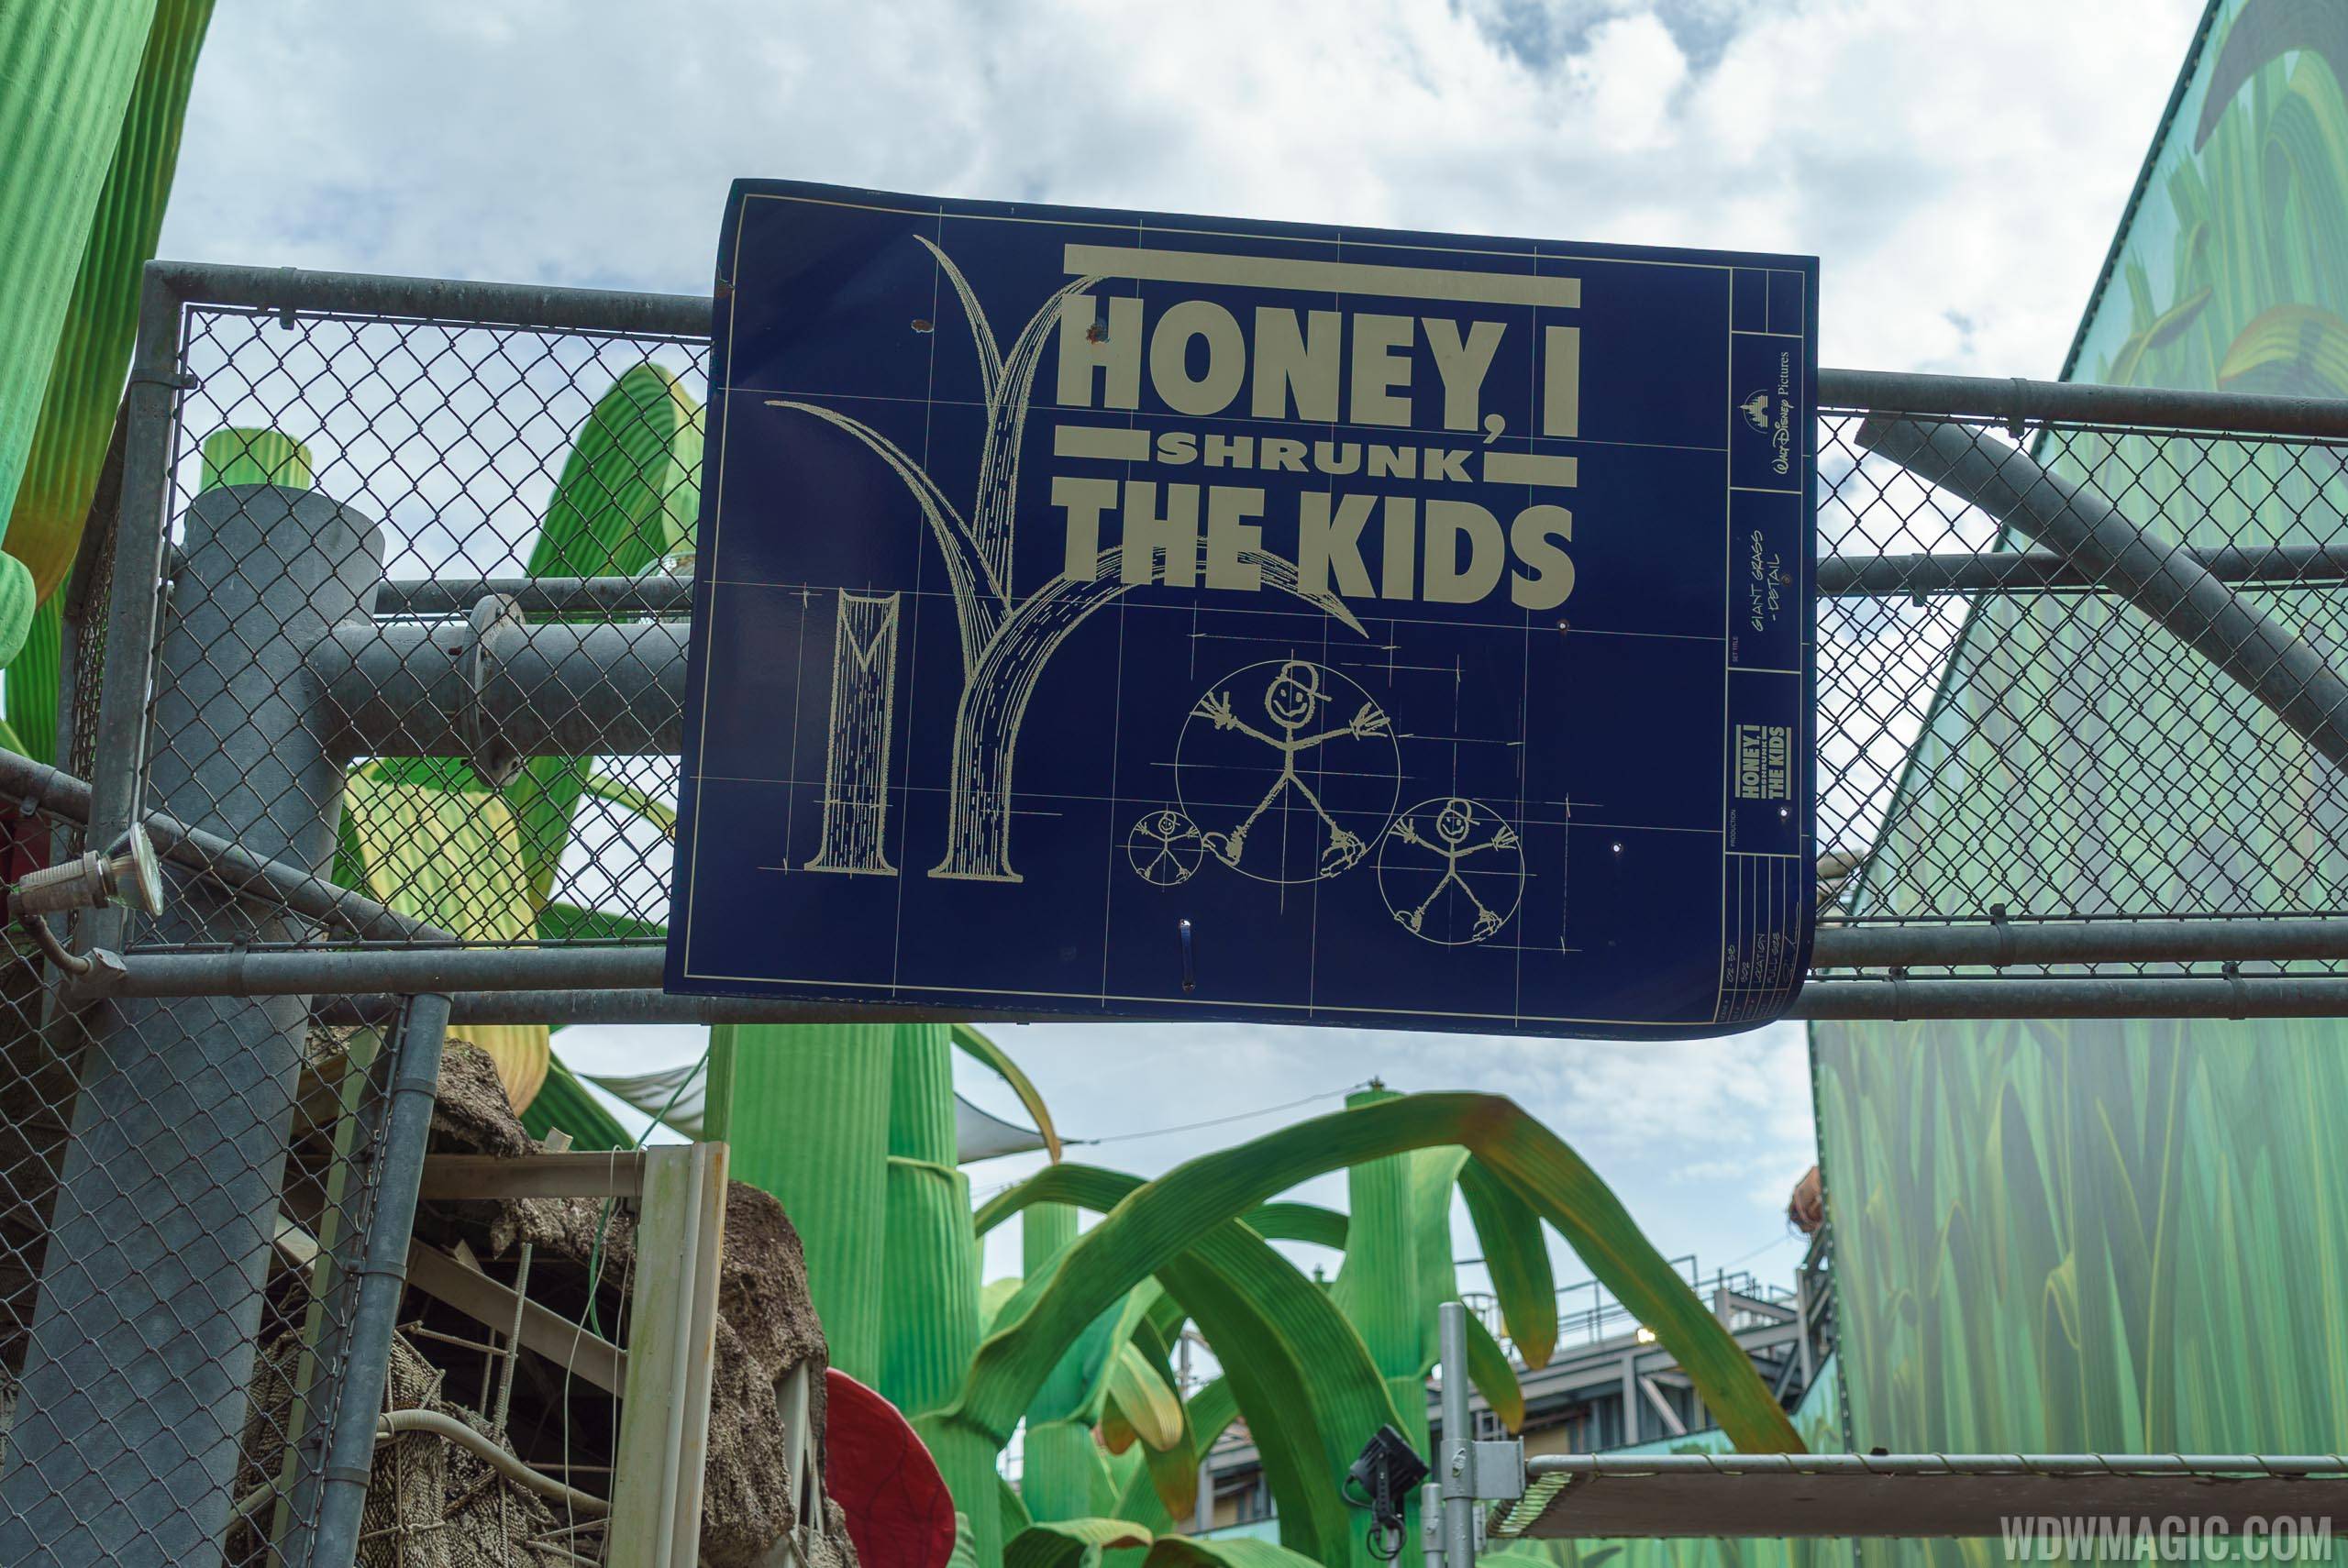 Honey, I Shrunk the Kids playground closing for lengthy refurbishment